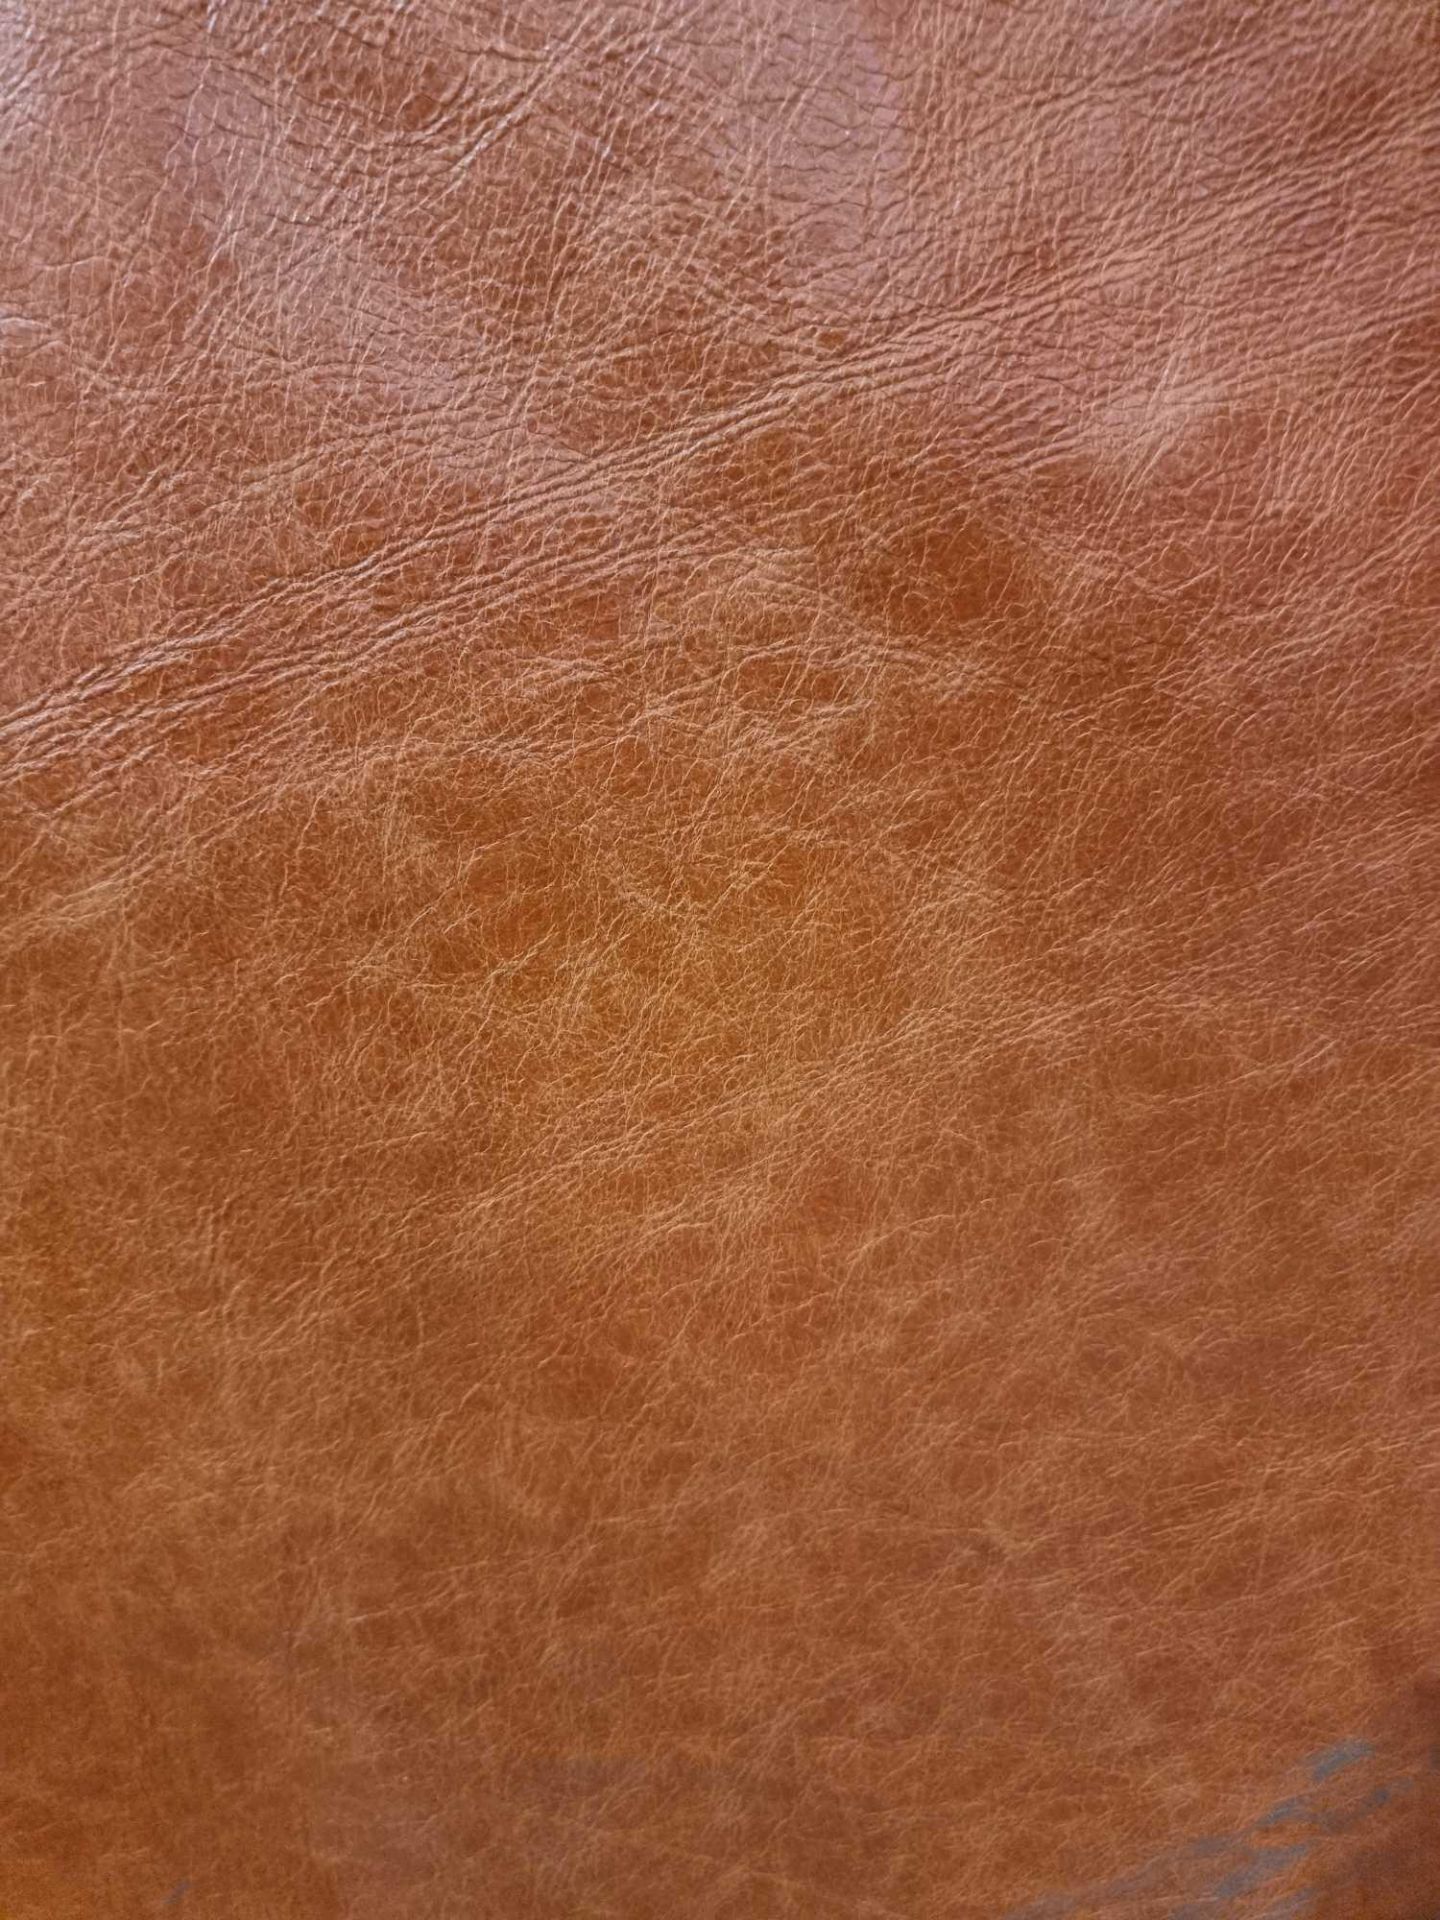 Futura Rimini Arabesque Leather Hide approximately 2.88mÂ² 1.8 x 1.6cm - Image 2 of 2